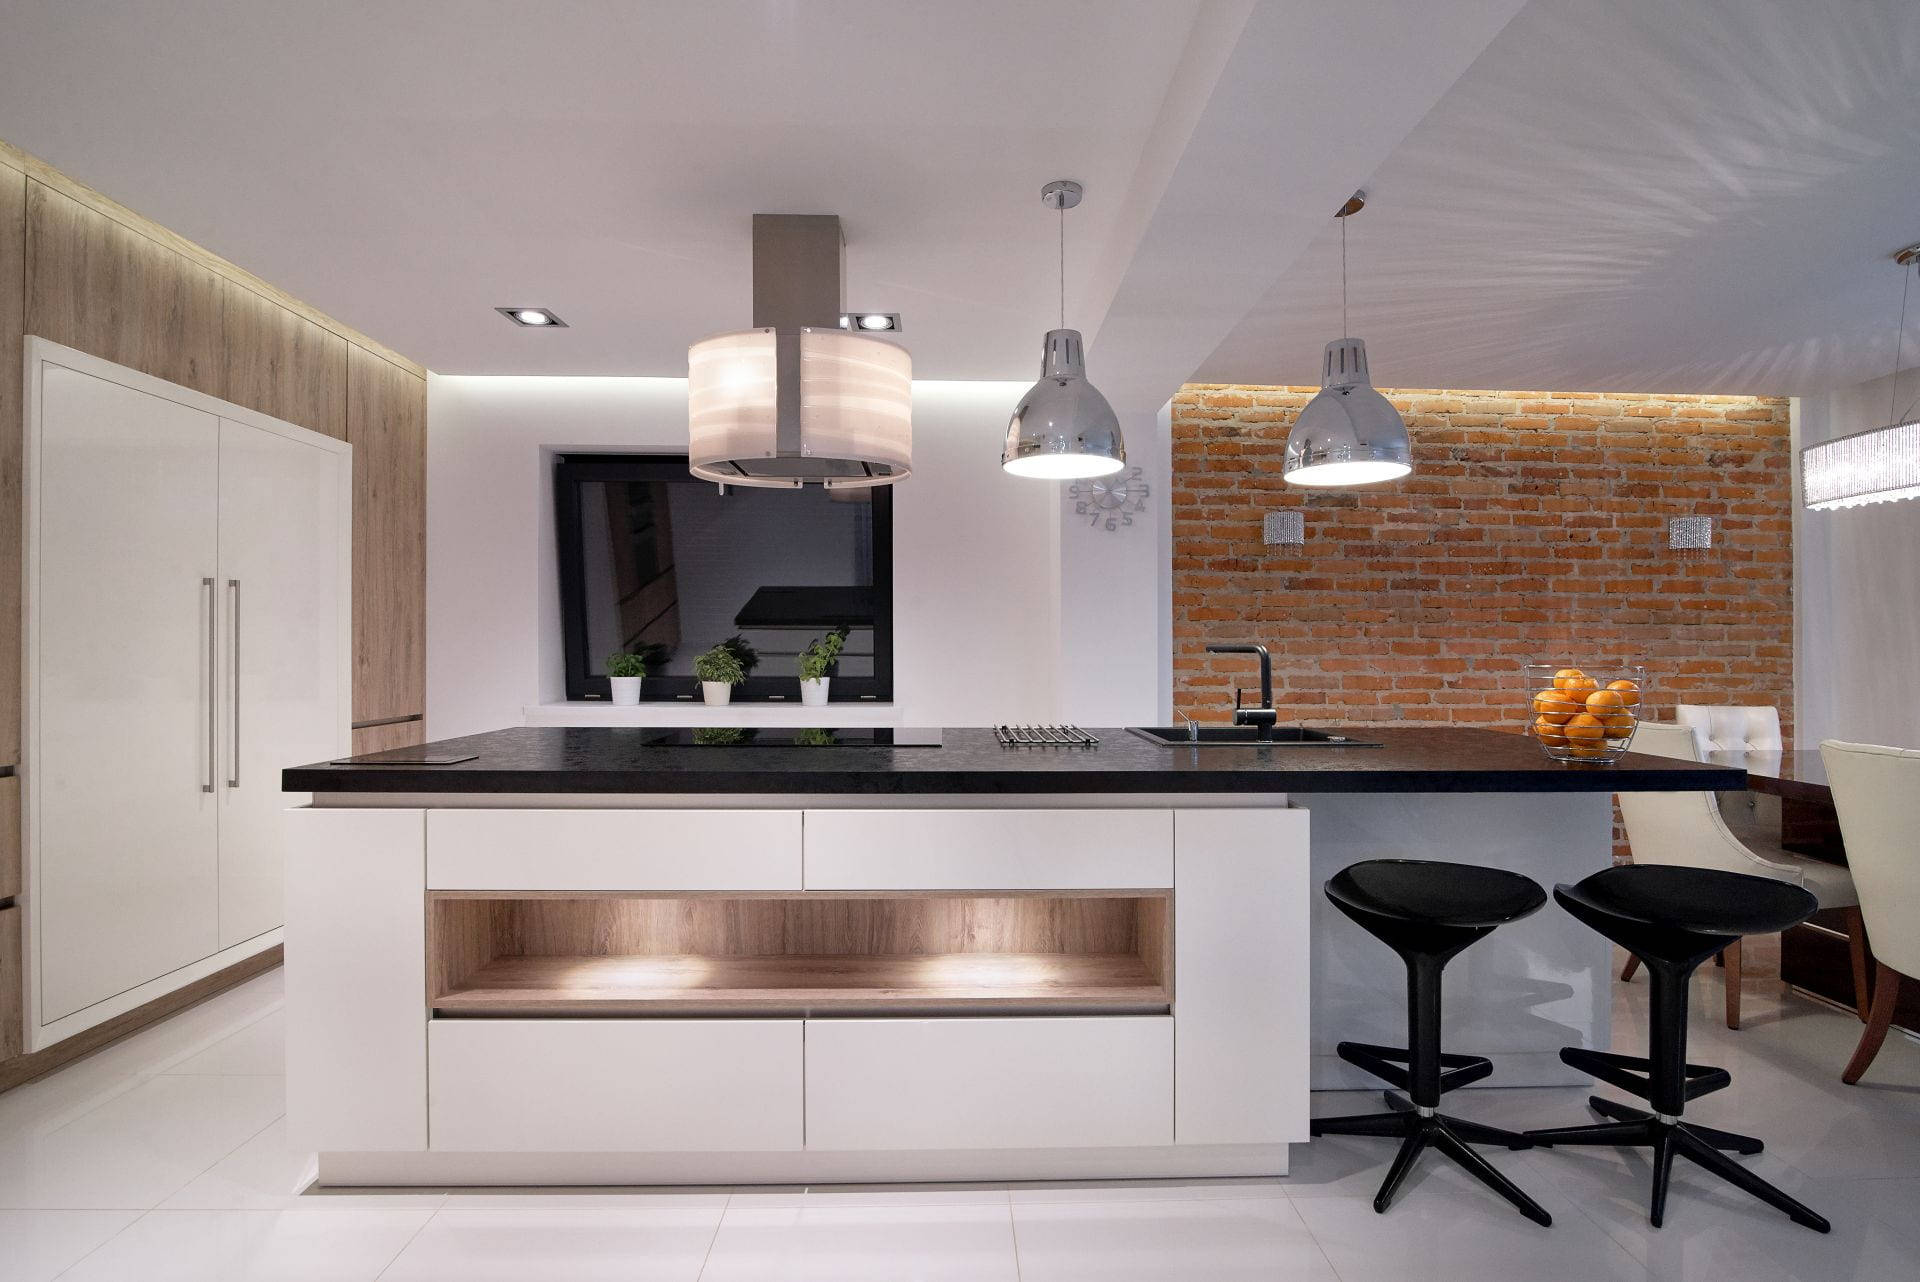 Modern Kitchen Design With Brick Wall Wallpaper